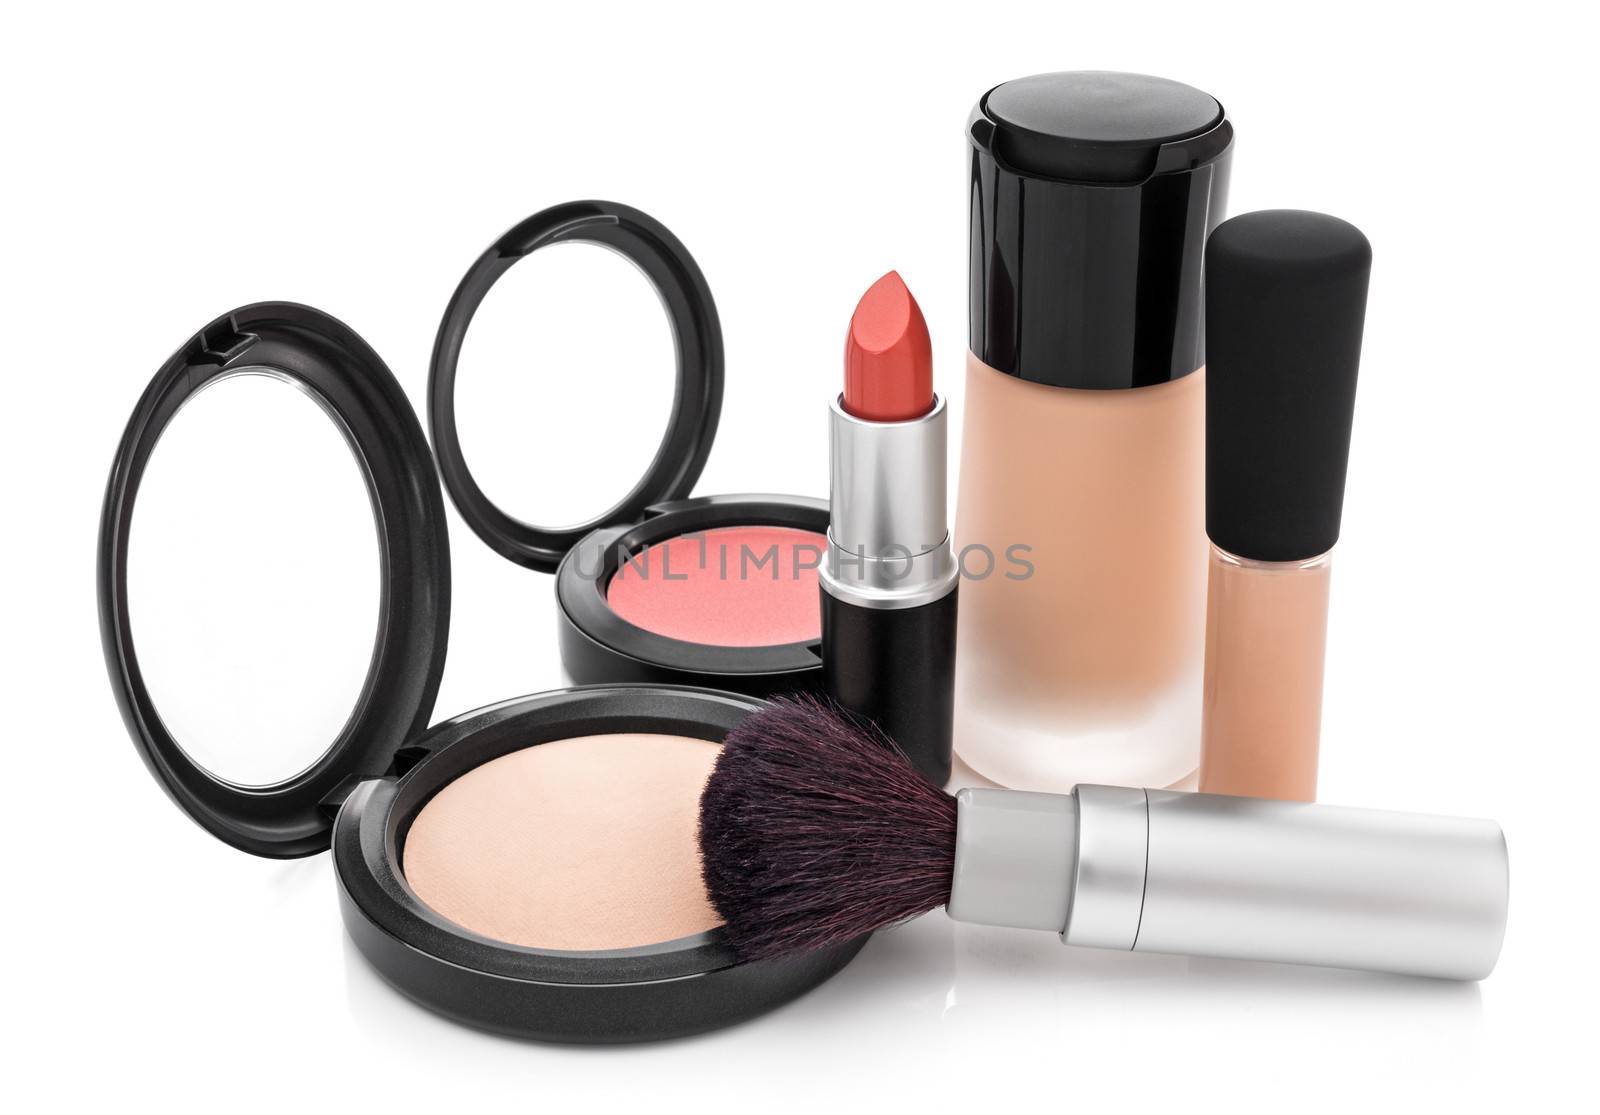 Makeup for natural look. Foundation, concealer, face powder, blush, lipstick, brush.